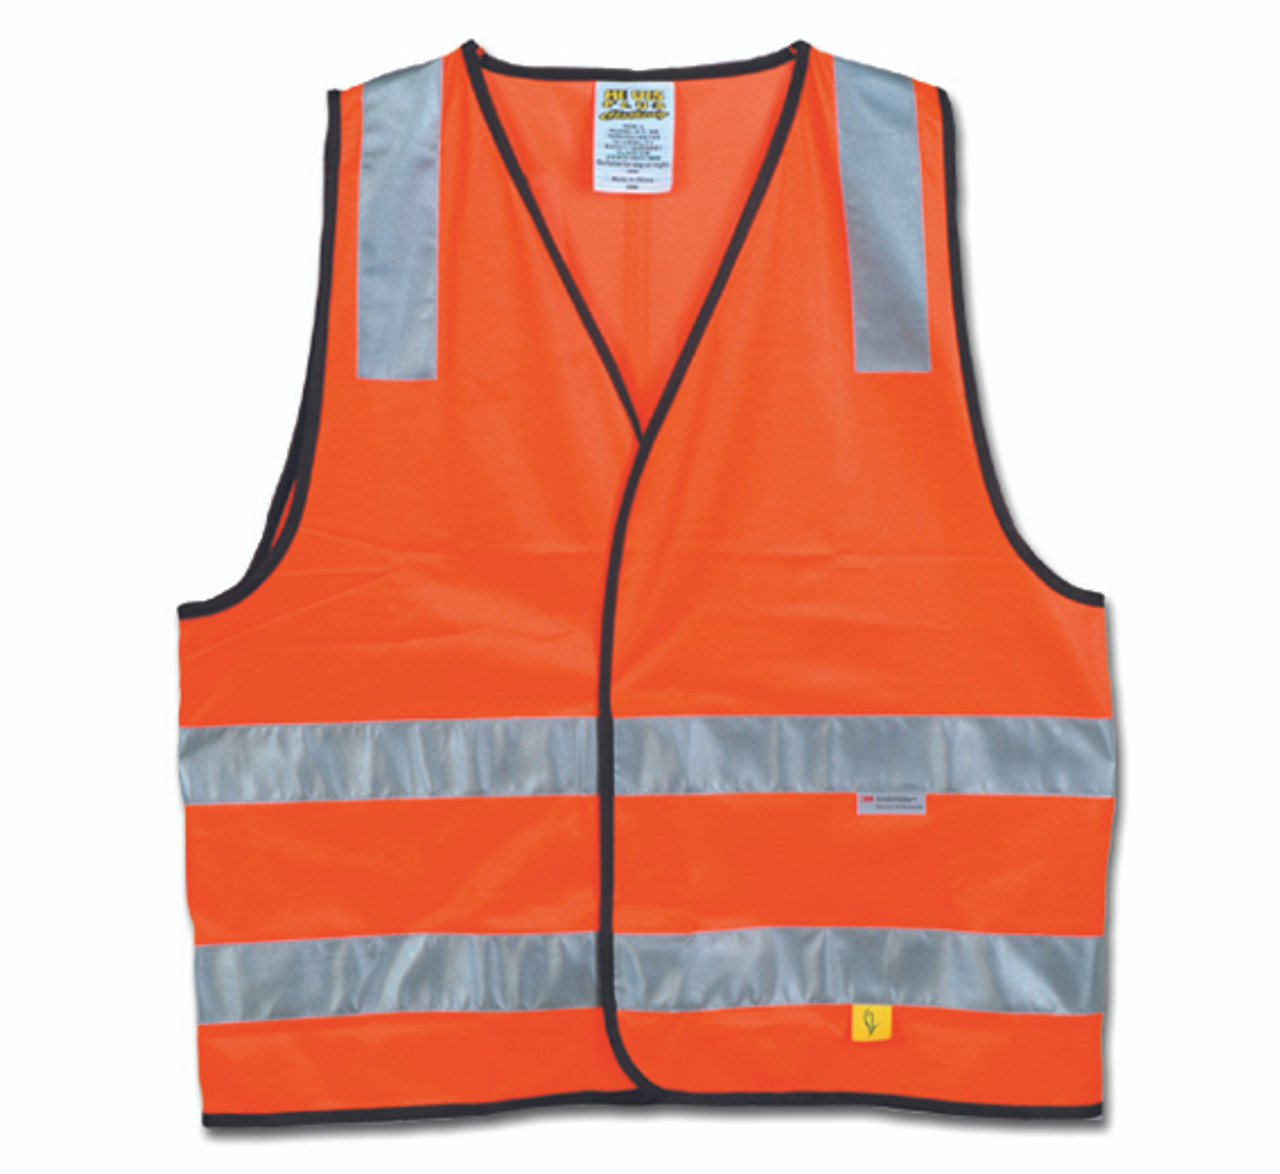 Hi-Vis Orange Safety Vest - Day/Night Use - 3Xlarge